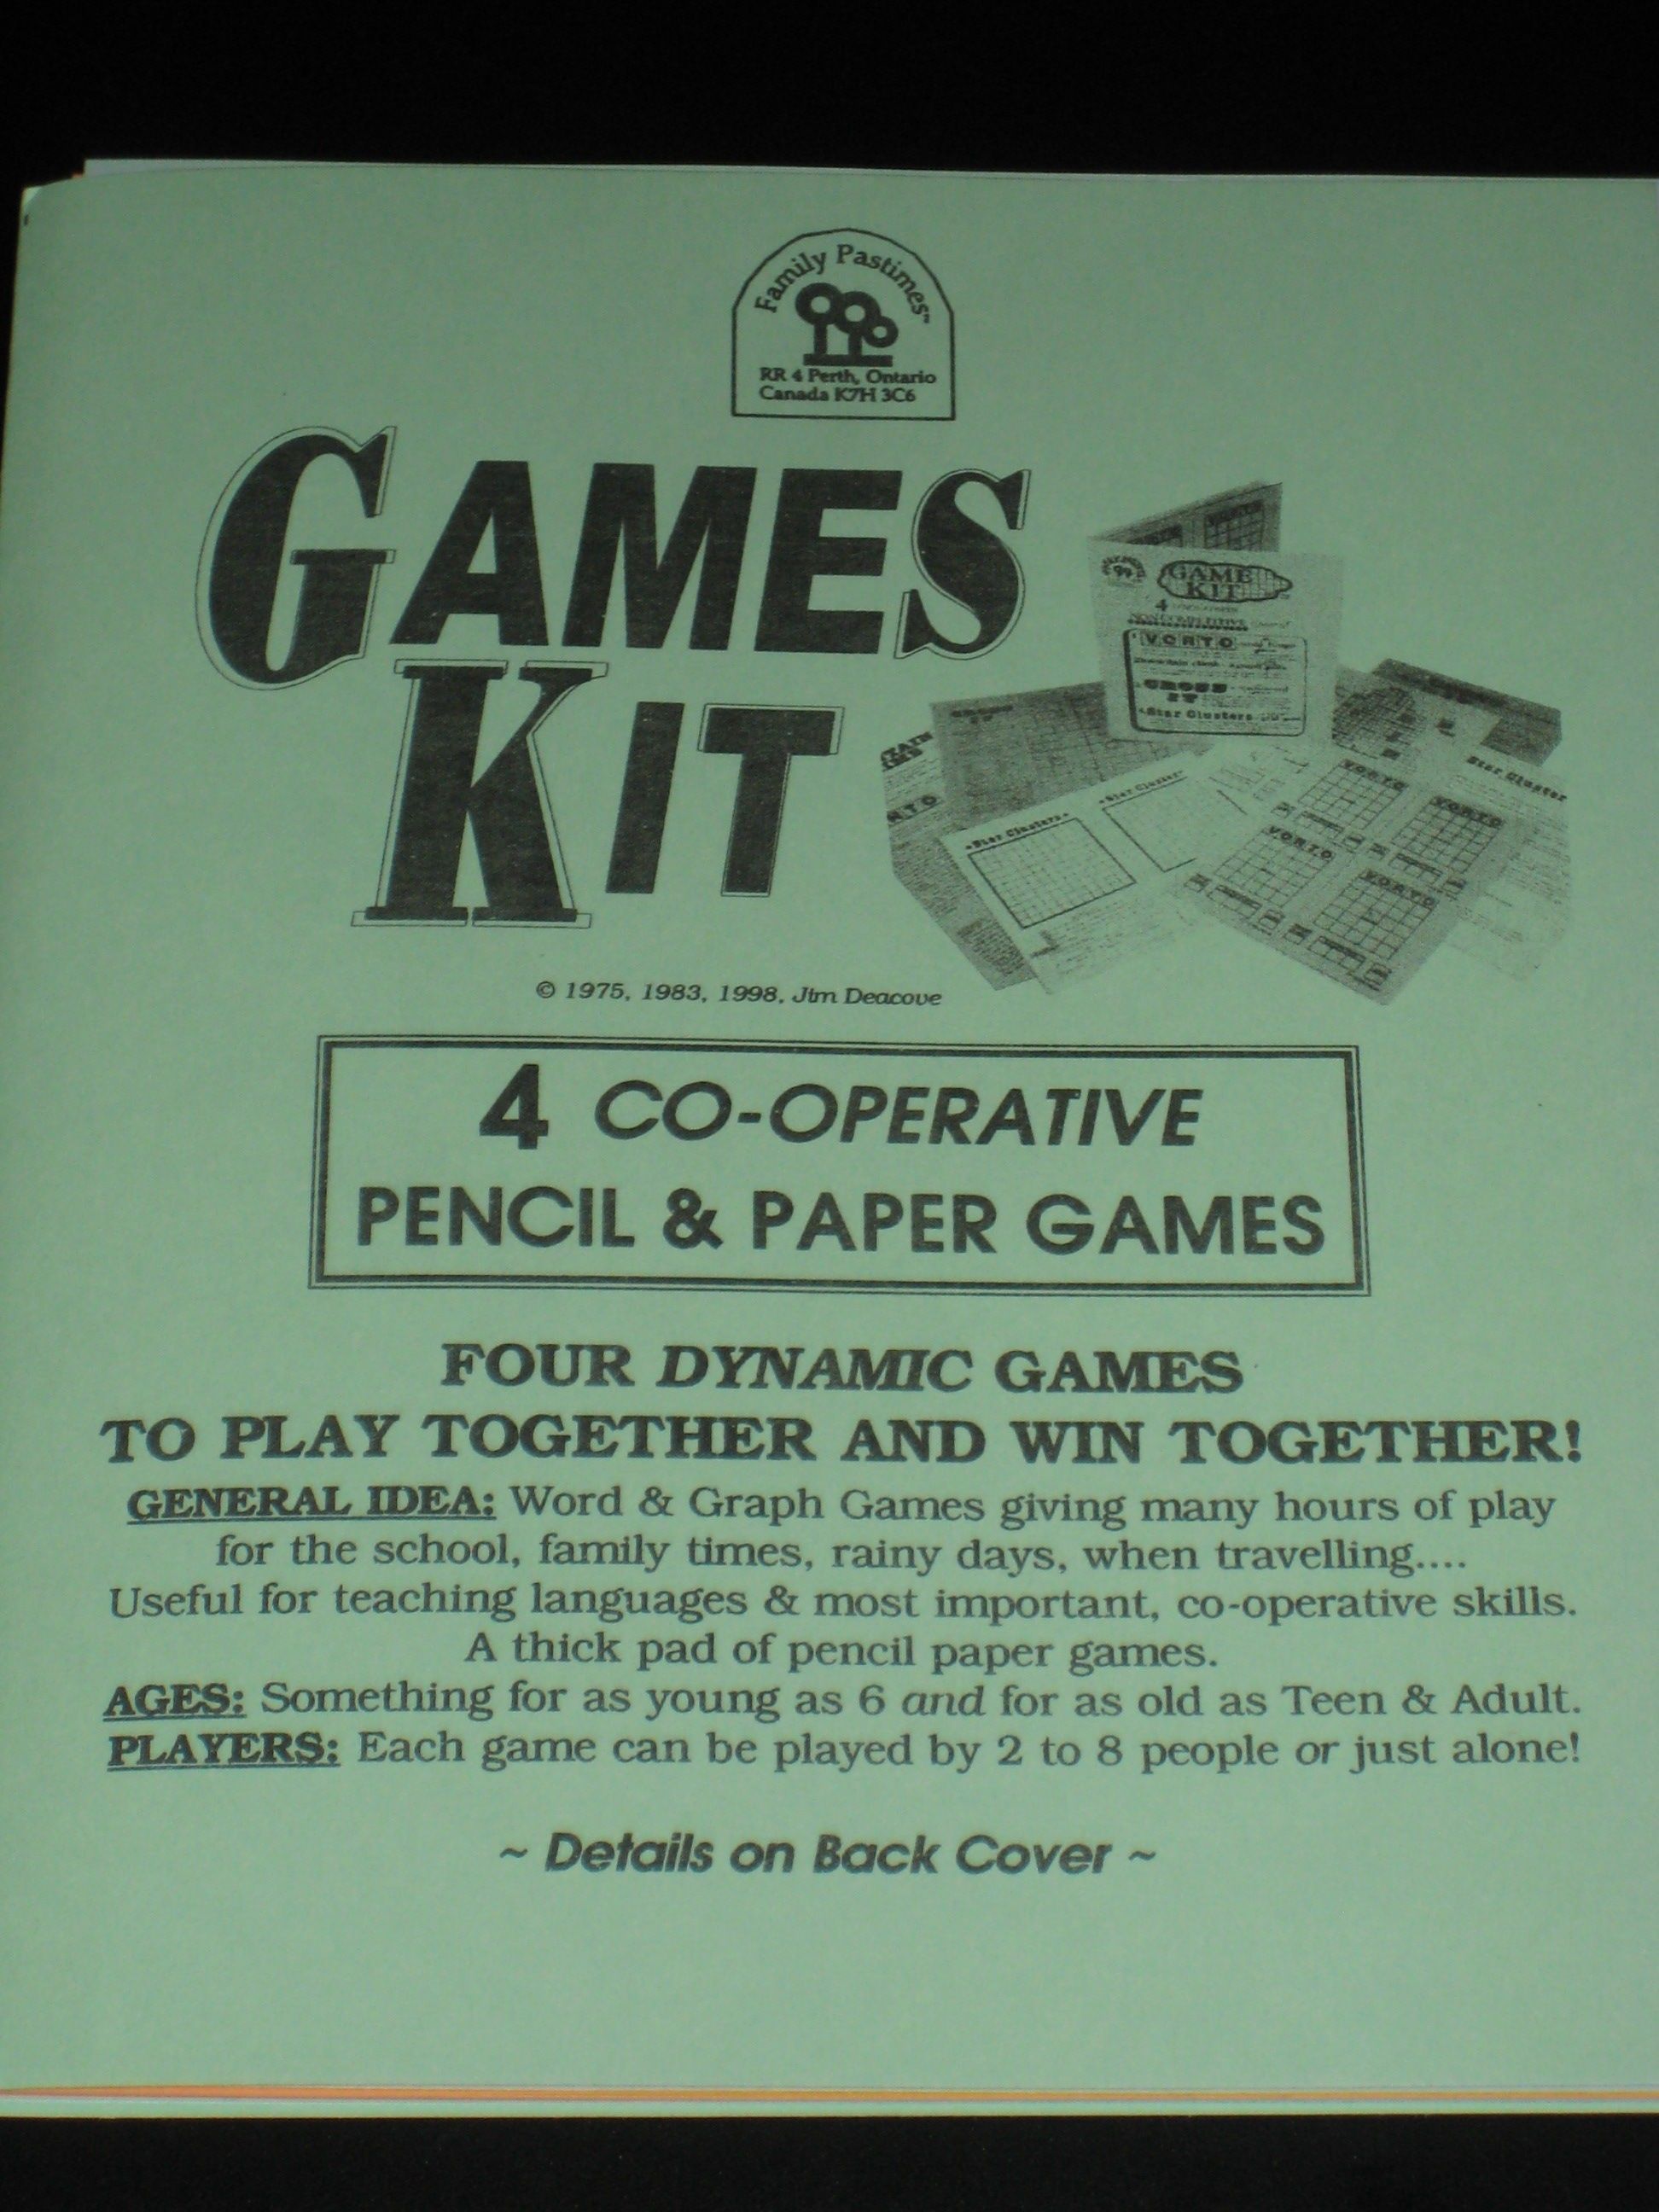 Games Kit: 4 Cooperative Pencil & Paper Games